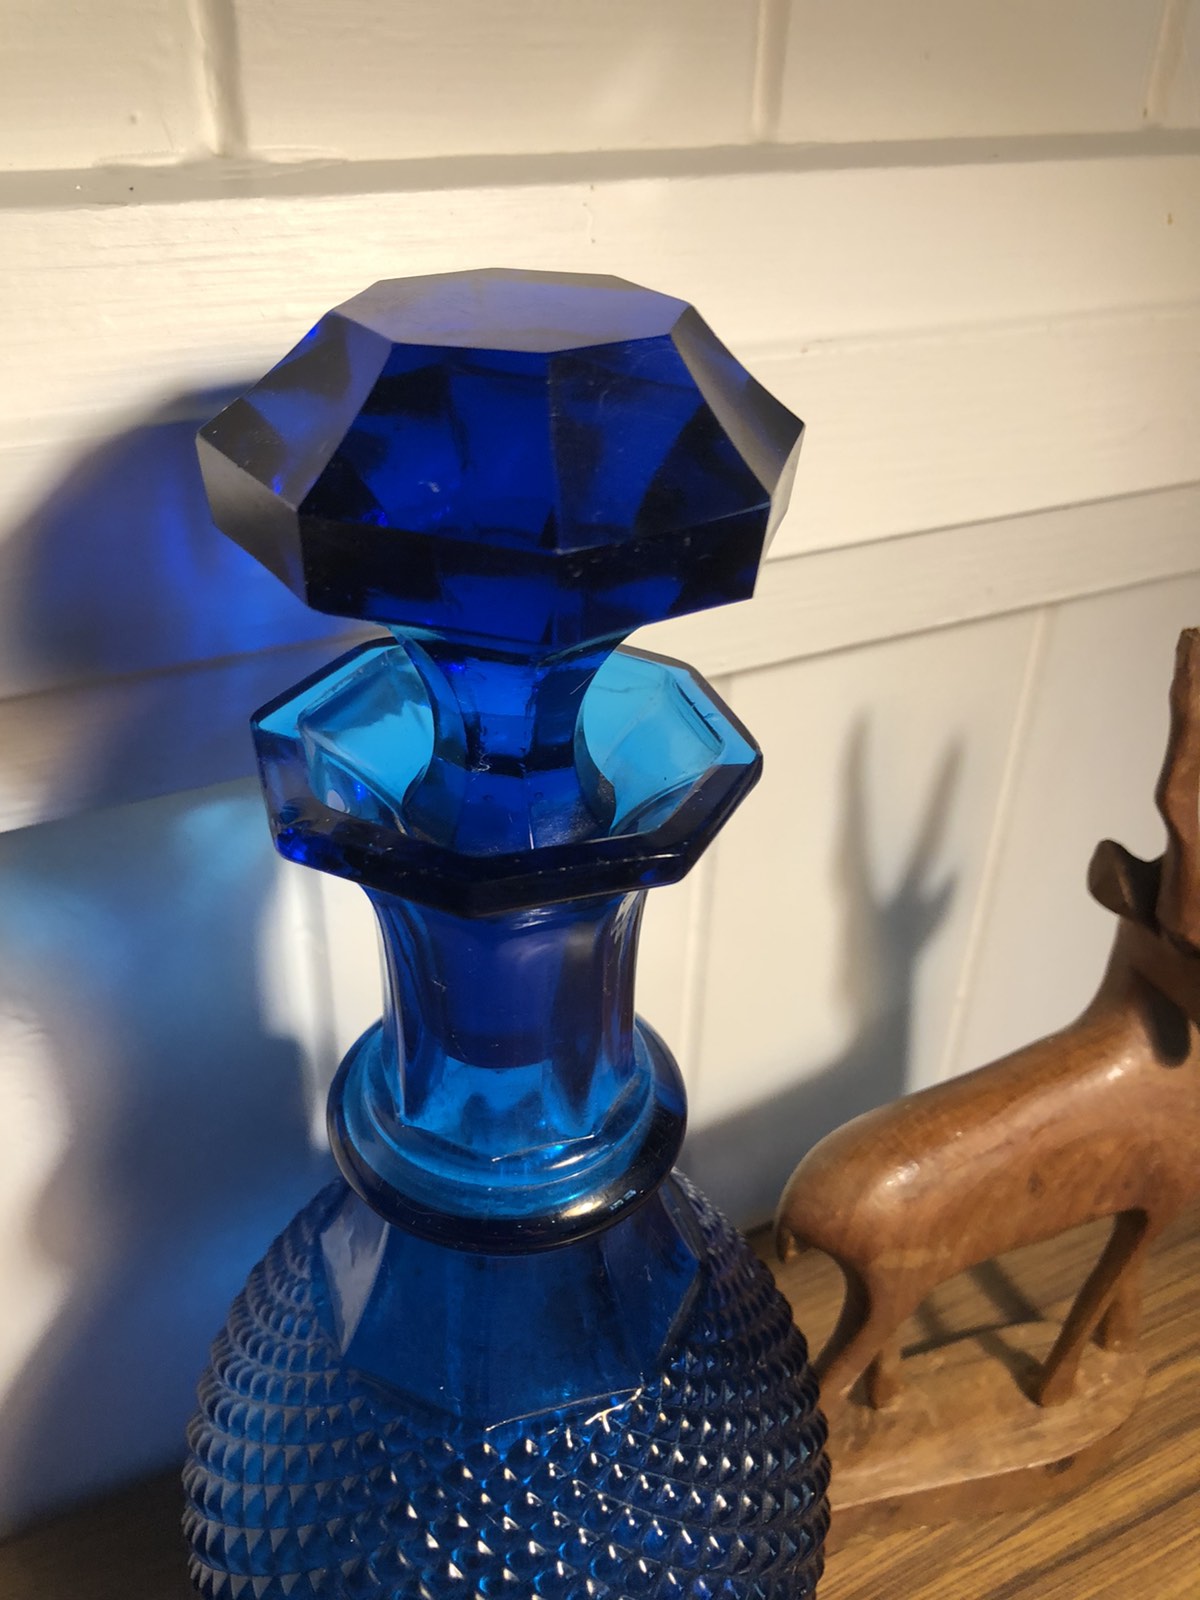 COLBALT BLUE GLASS Original Genie Bottle Stopper $200.00 - PicClick AU